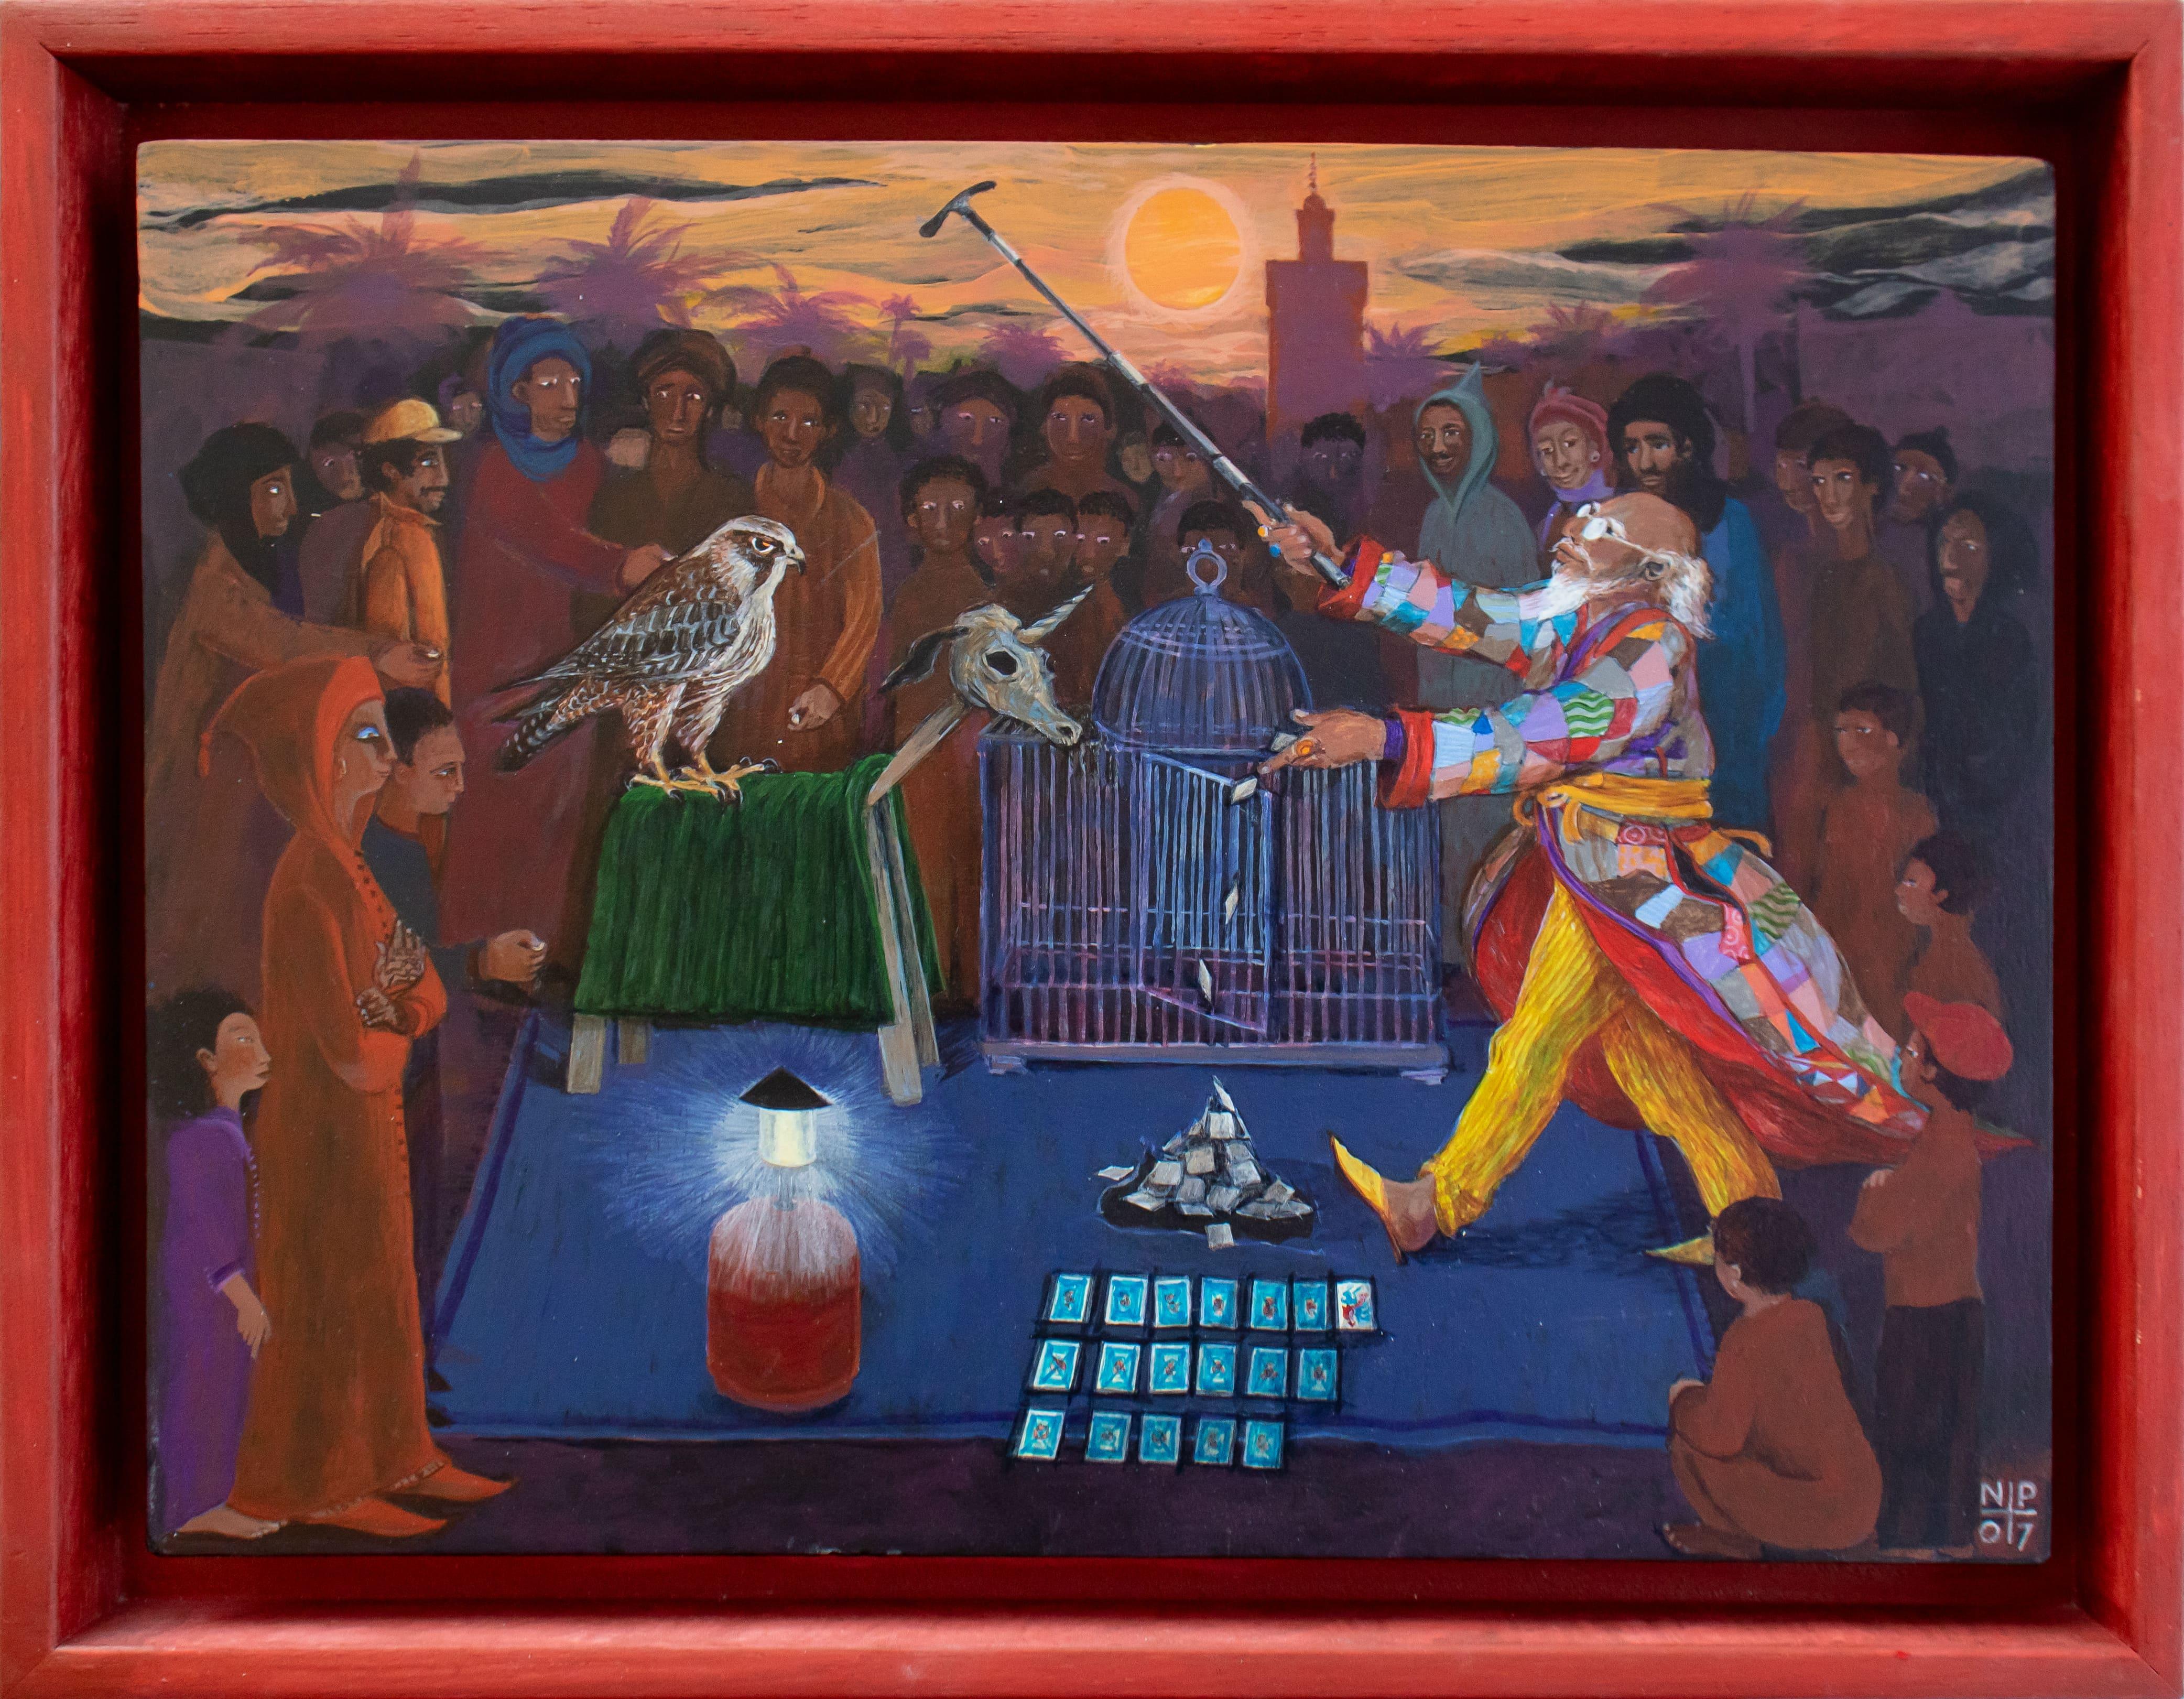 Nancy Patterson Figurative Painting - Animal Folk Art Painting Narrative Painting Morocco Africa Magician Red/Orange